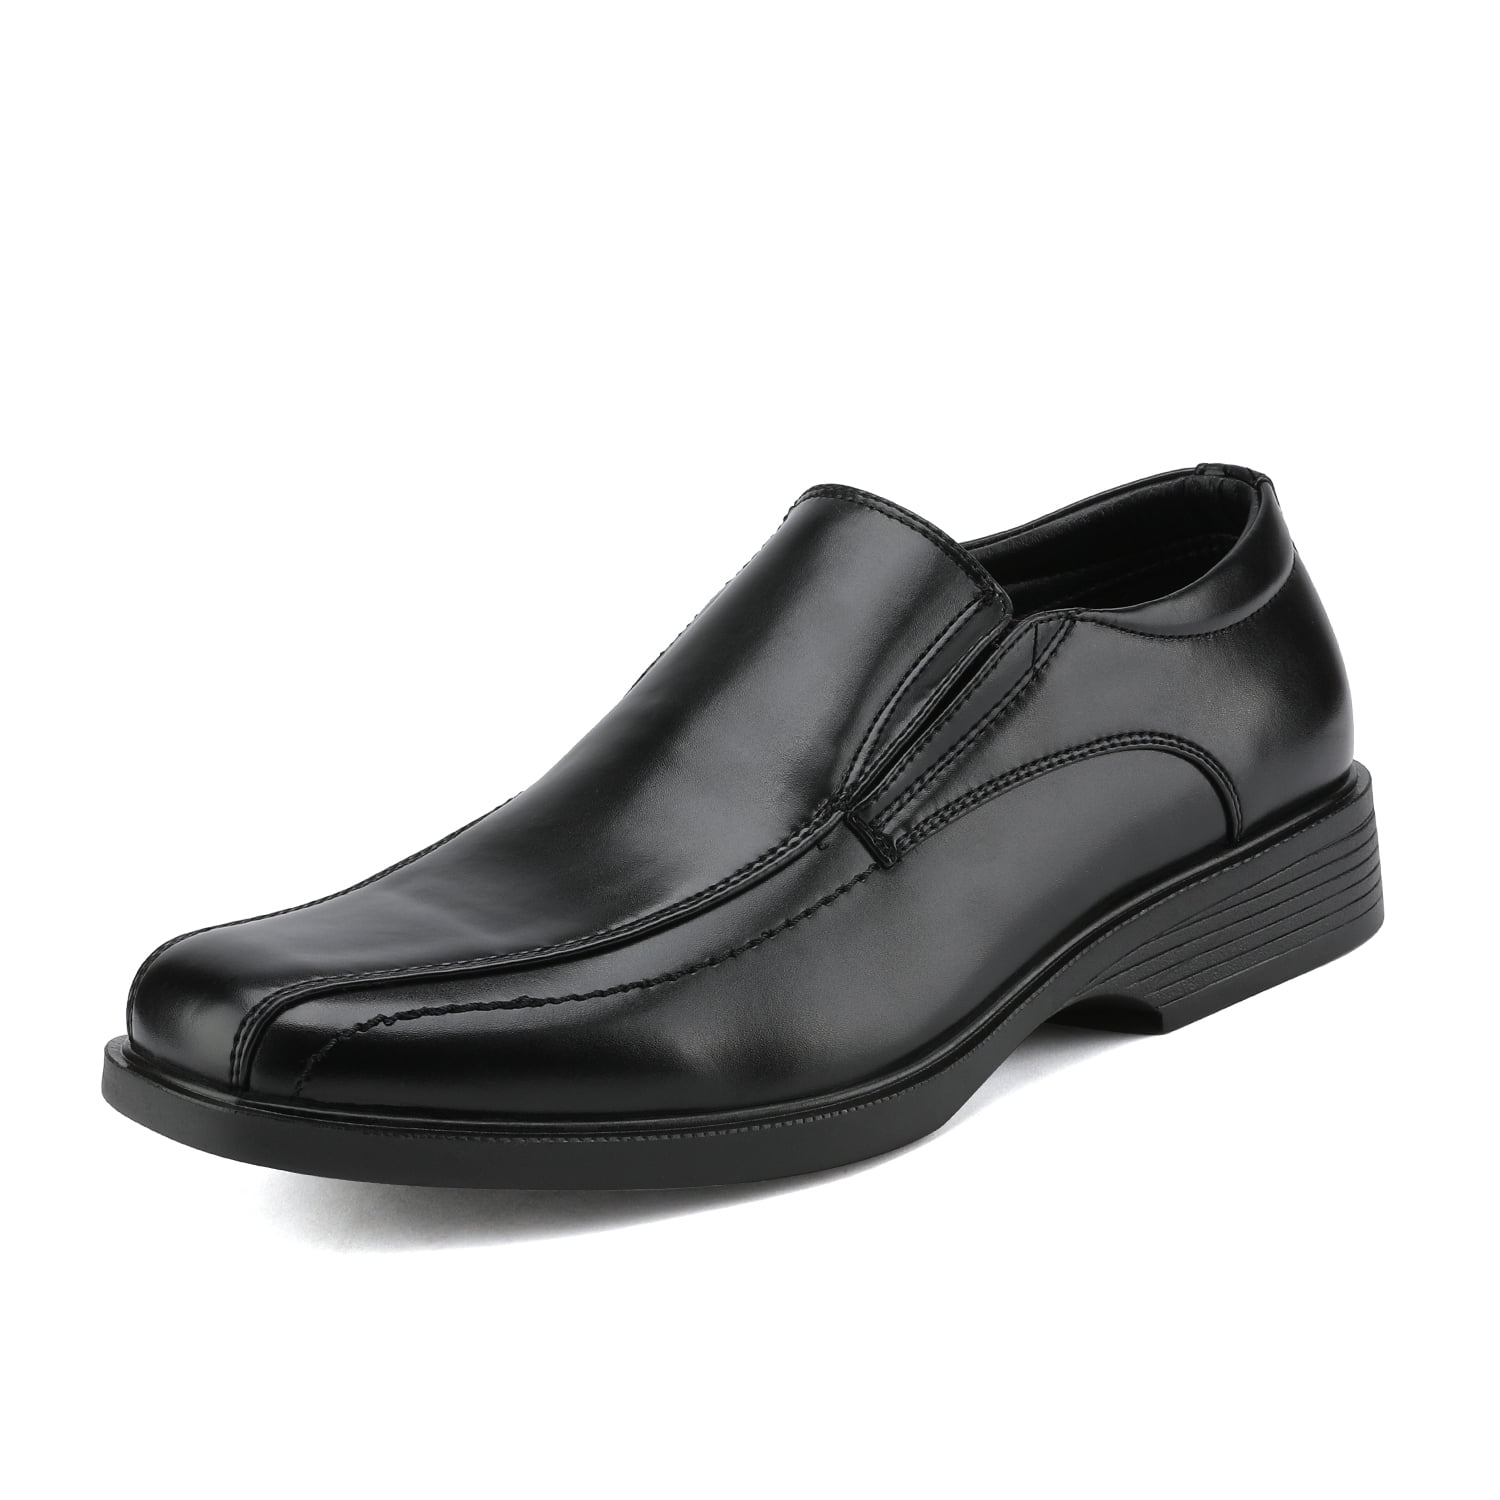 BRUNO MARC NEW YORK Men's Dress Shoes Loafers Slip On Oxford Formal Leather Suit Shoes CAMBRIDGE-05 Black Size 11 M US 